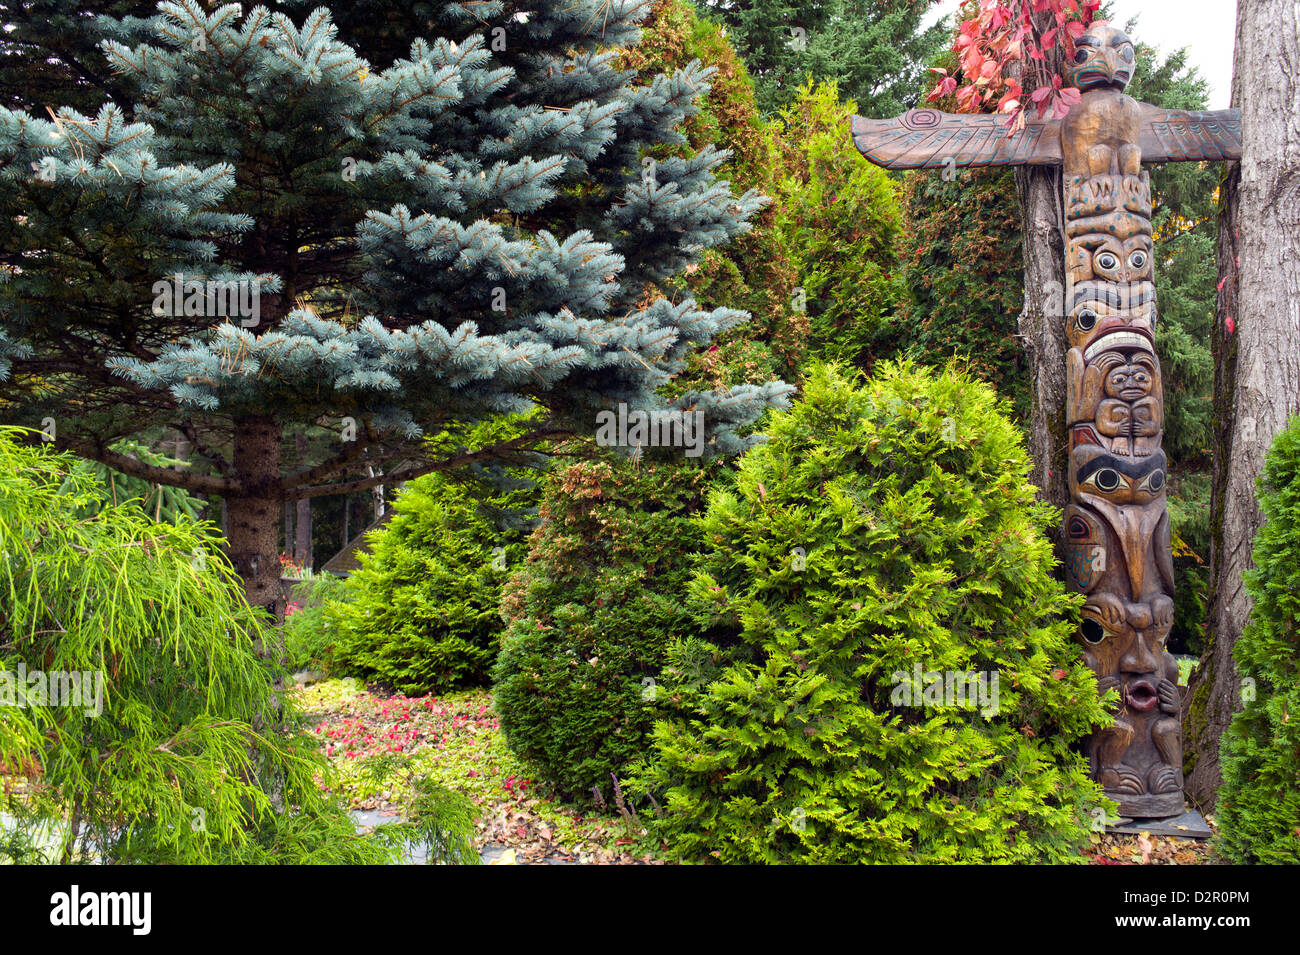 Totem, Garden at Auclair, Bas Saint-Laurent region, Quebec Province, Canada, North America Stock Photo